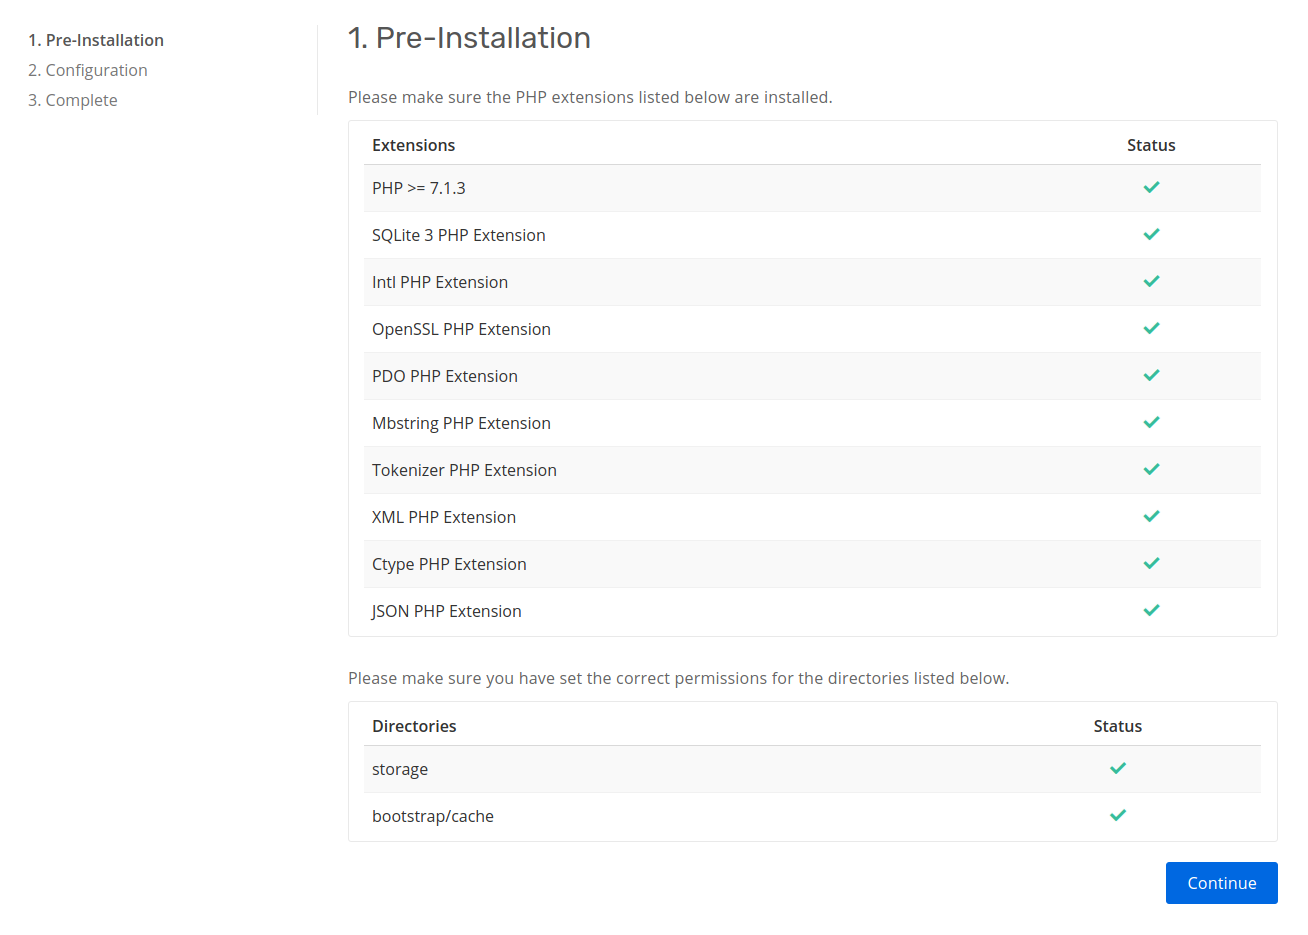 install page pre installation step ecdeaa8e